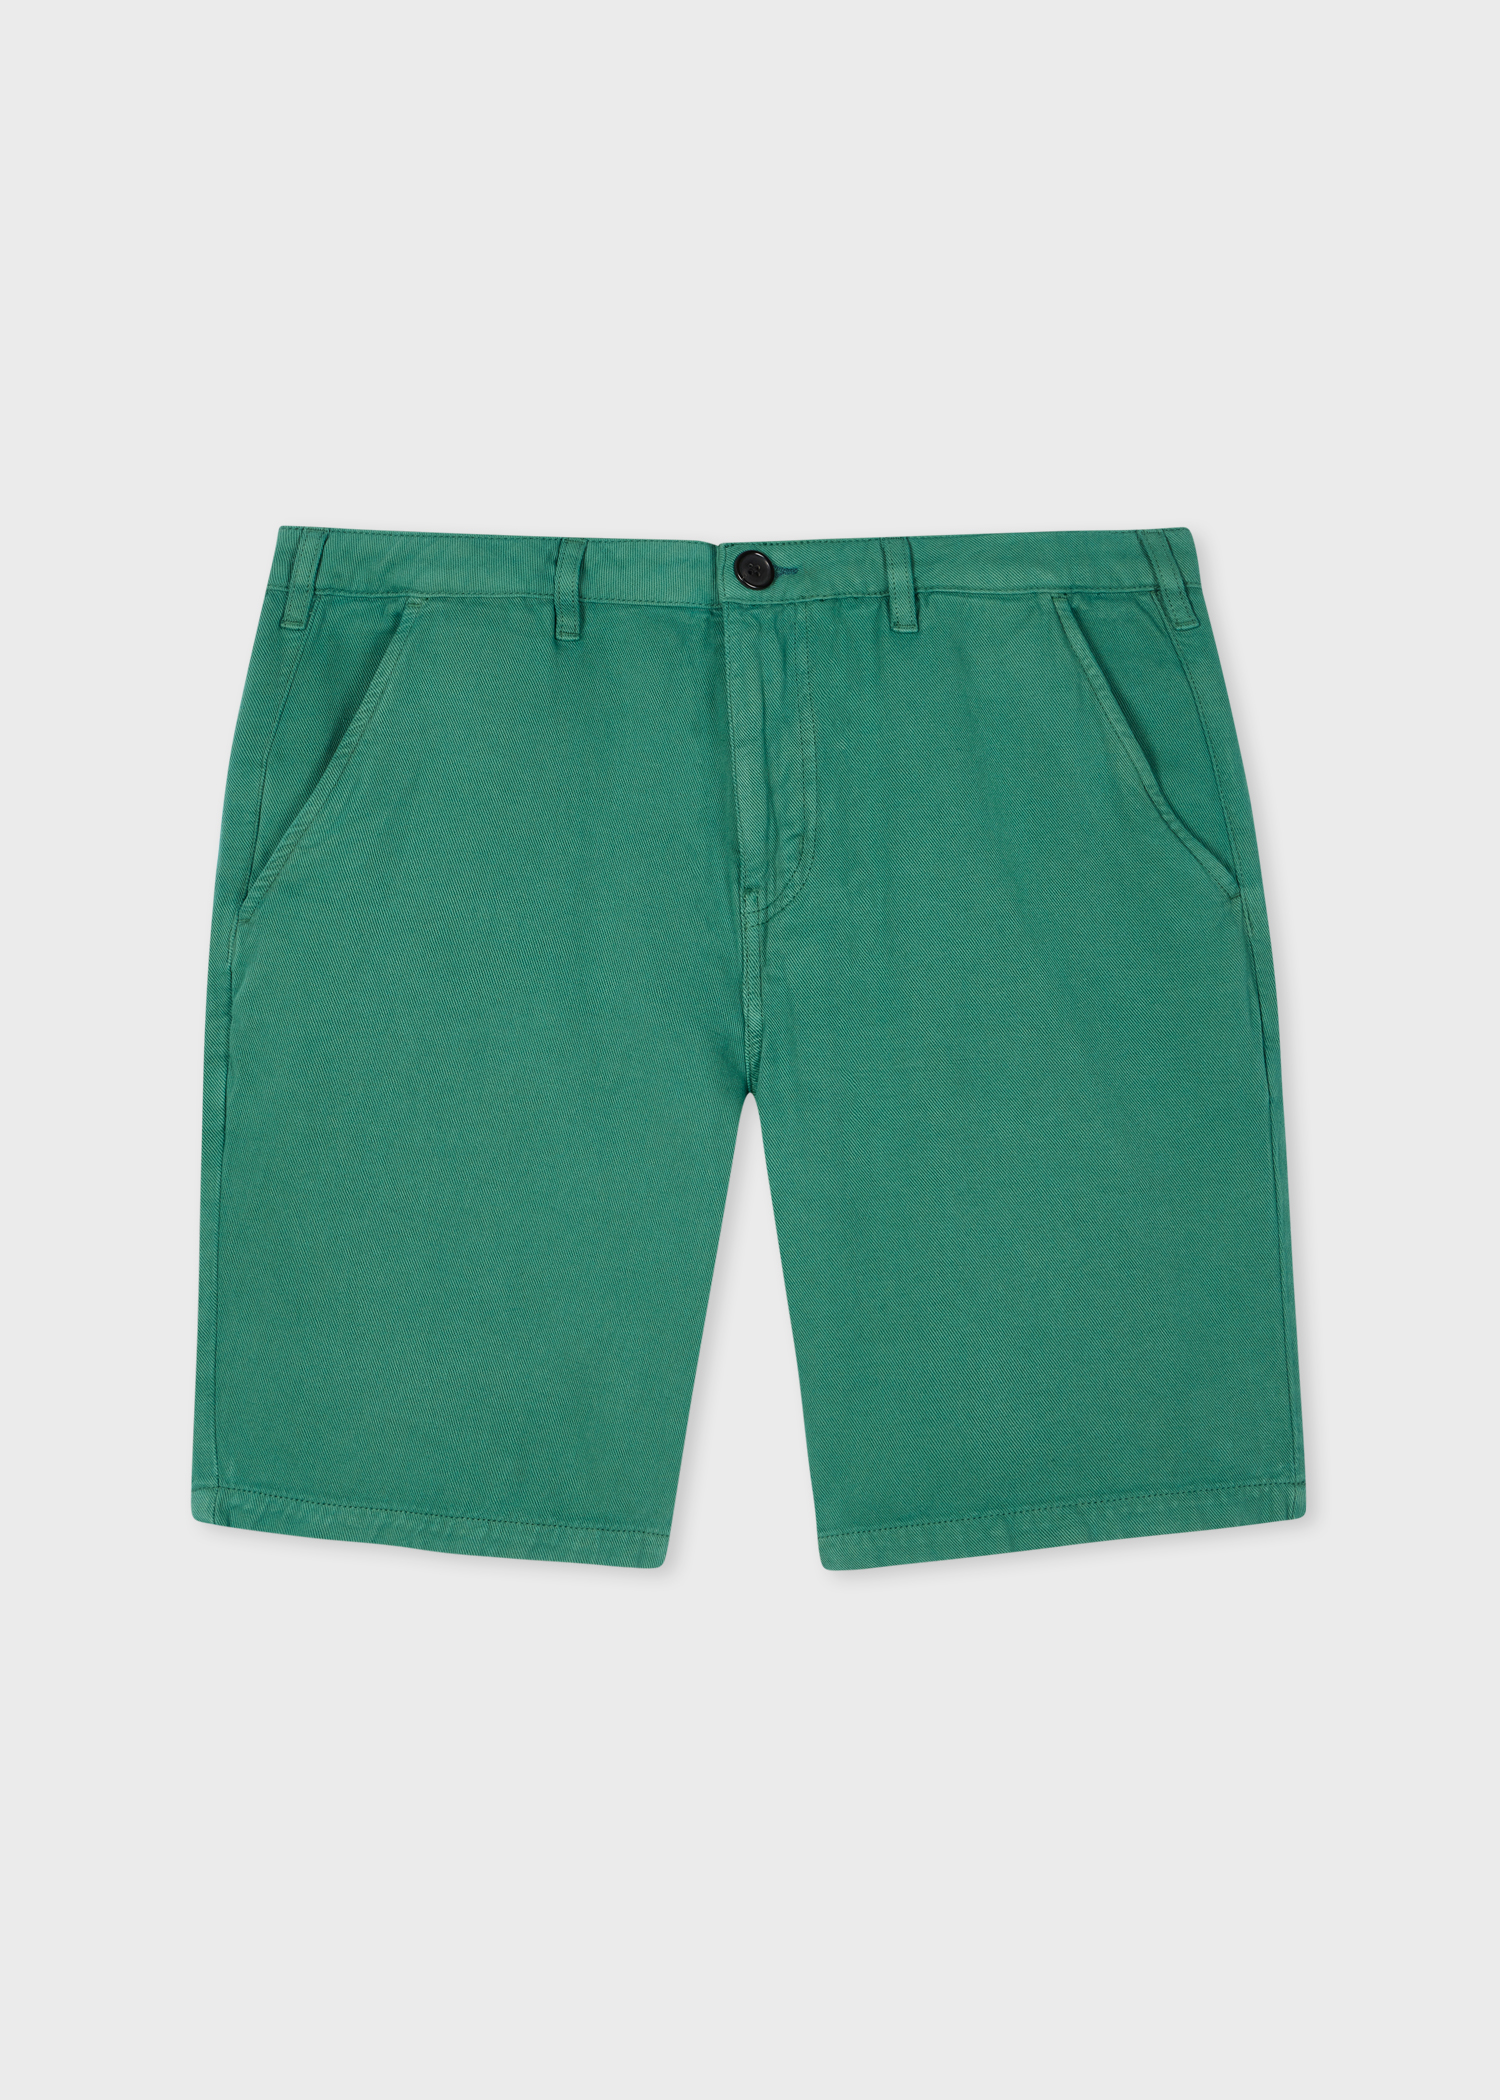 Men's Green Cotton-Linen 'Broad Stripe Zebra' Shorts